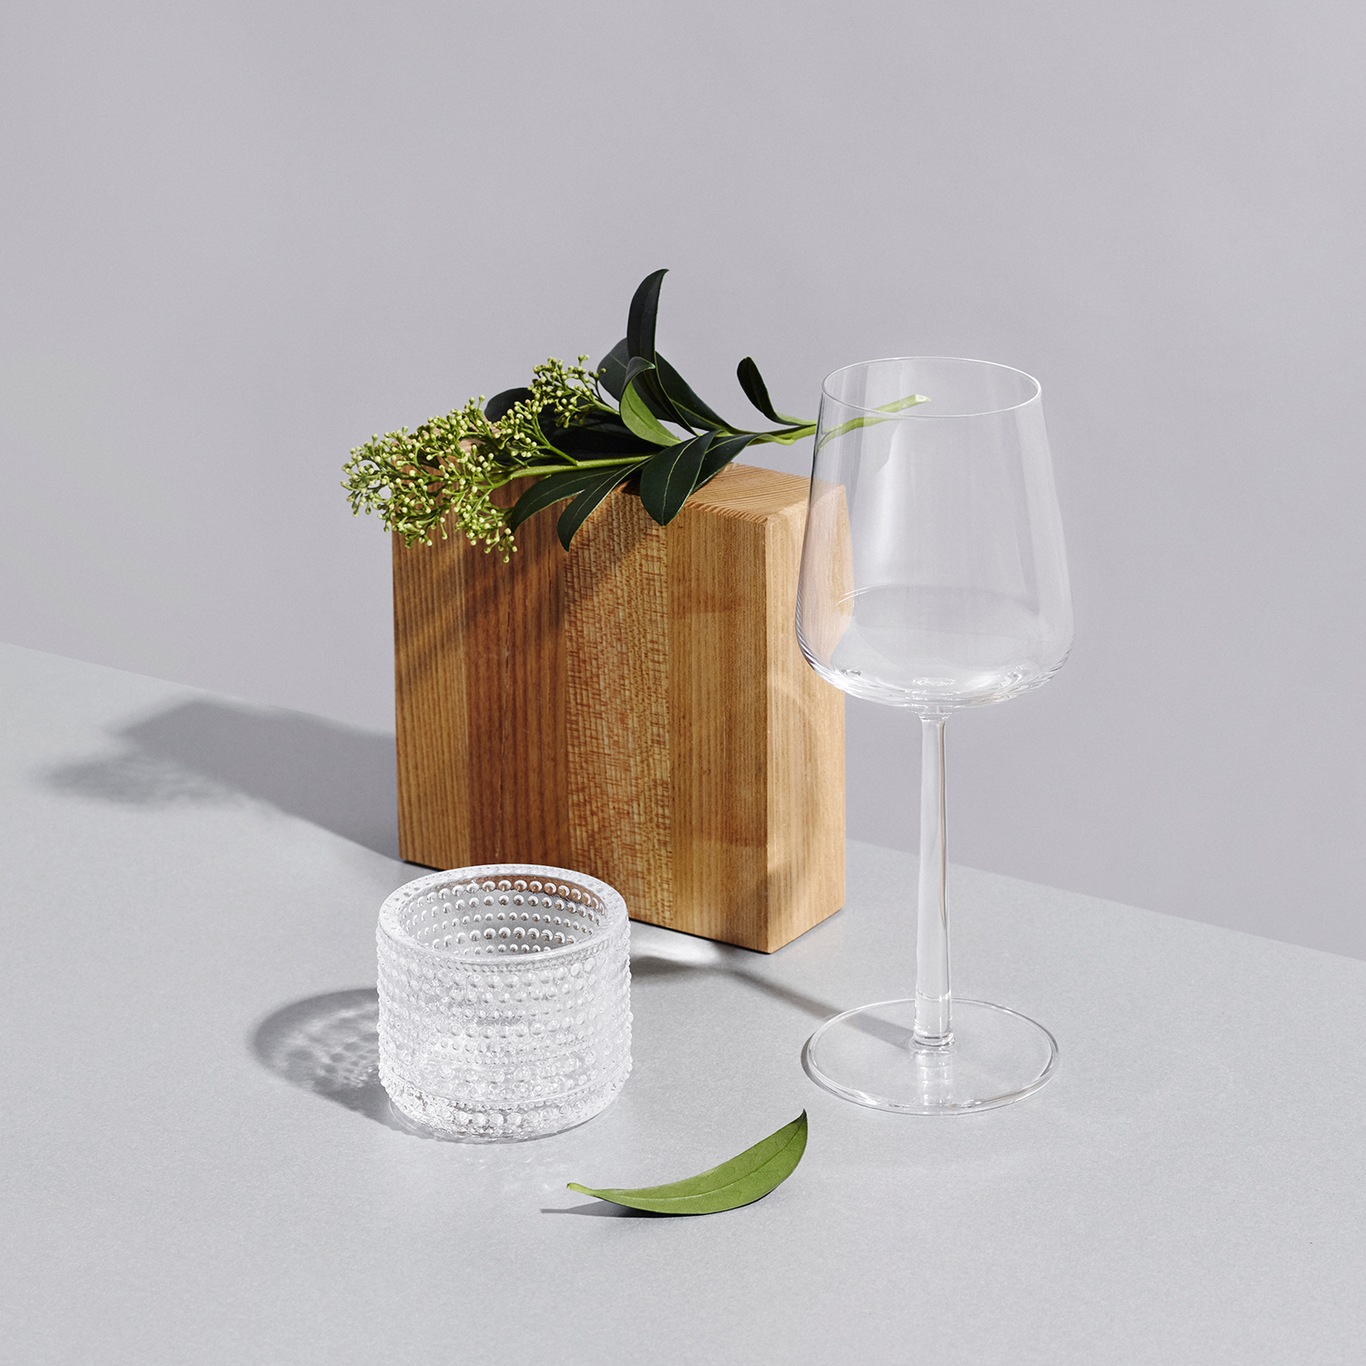 https://royaldesign.com/image/2/iittala-essence-red-wine-glass-45-cl-2-pcs-2?w=800&quality=80